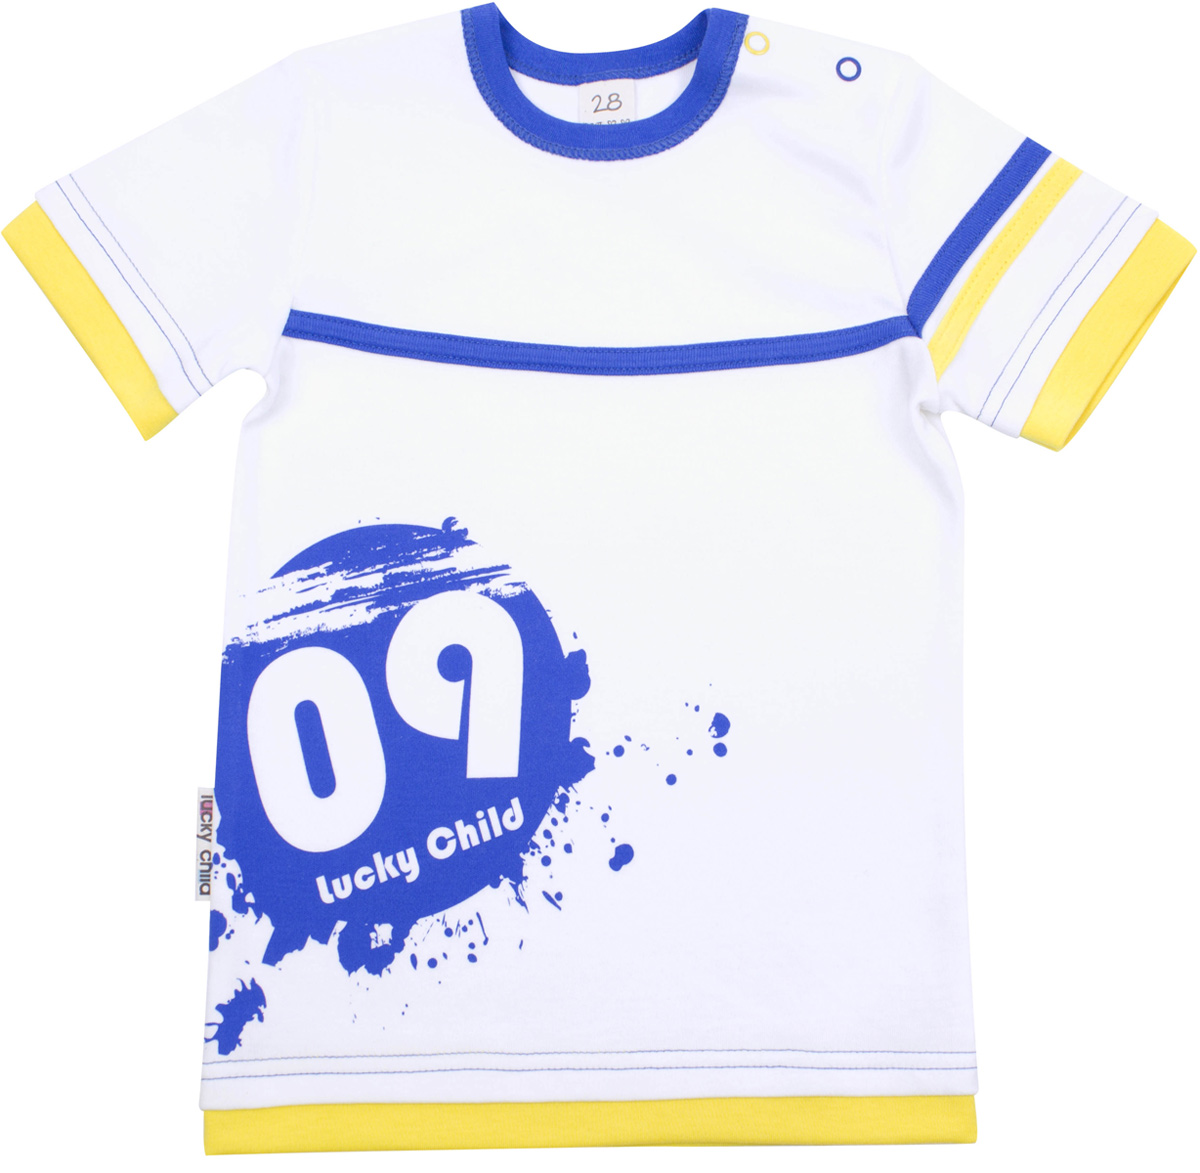 Футболка для мальчика Lucky Child Летний марафон, цвет: белый, голубой. 19-261. Размер 74/80